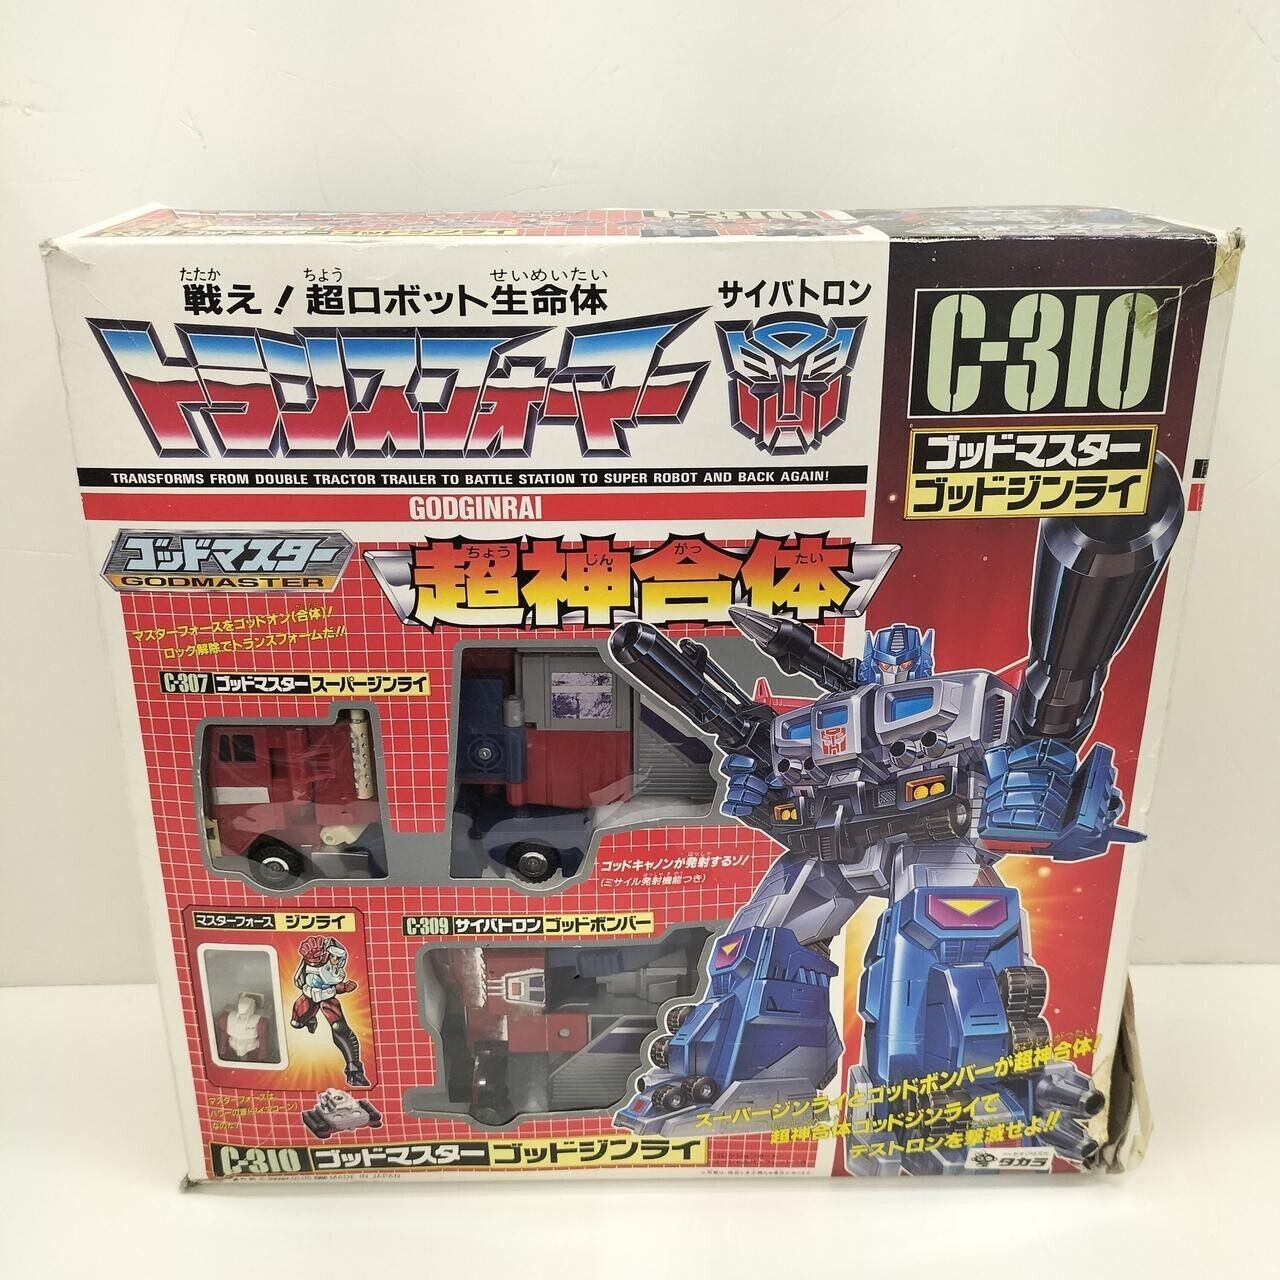 Takara Transformers C-310 Godmaster Godginrai Action Figure with Box Japan